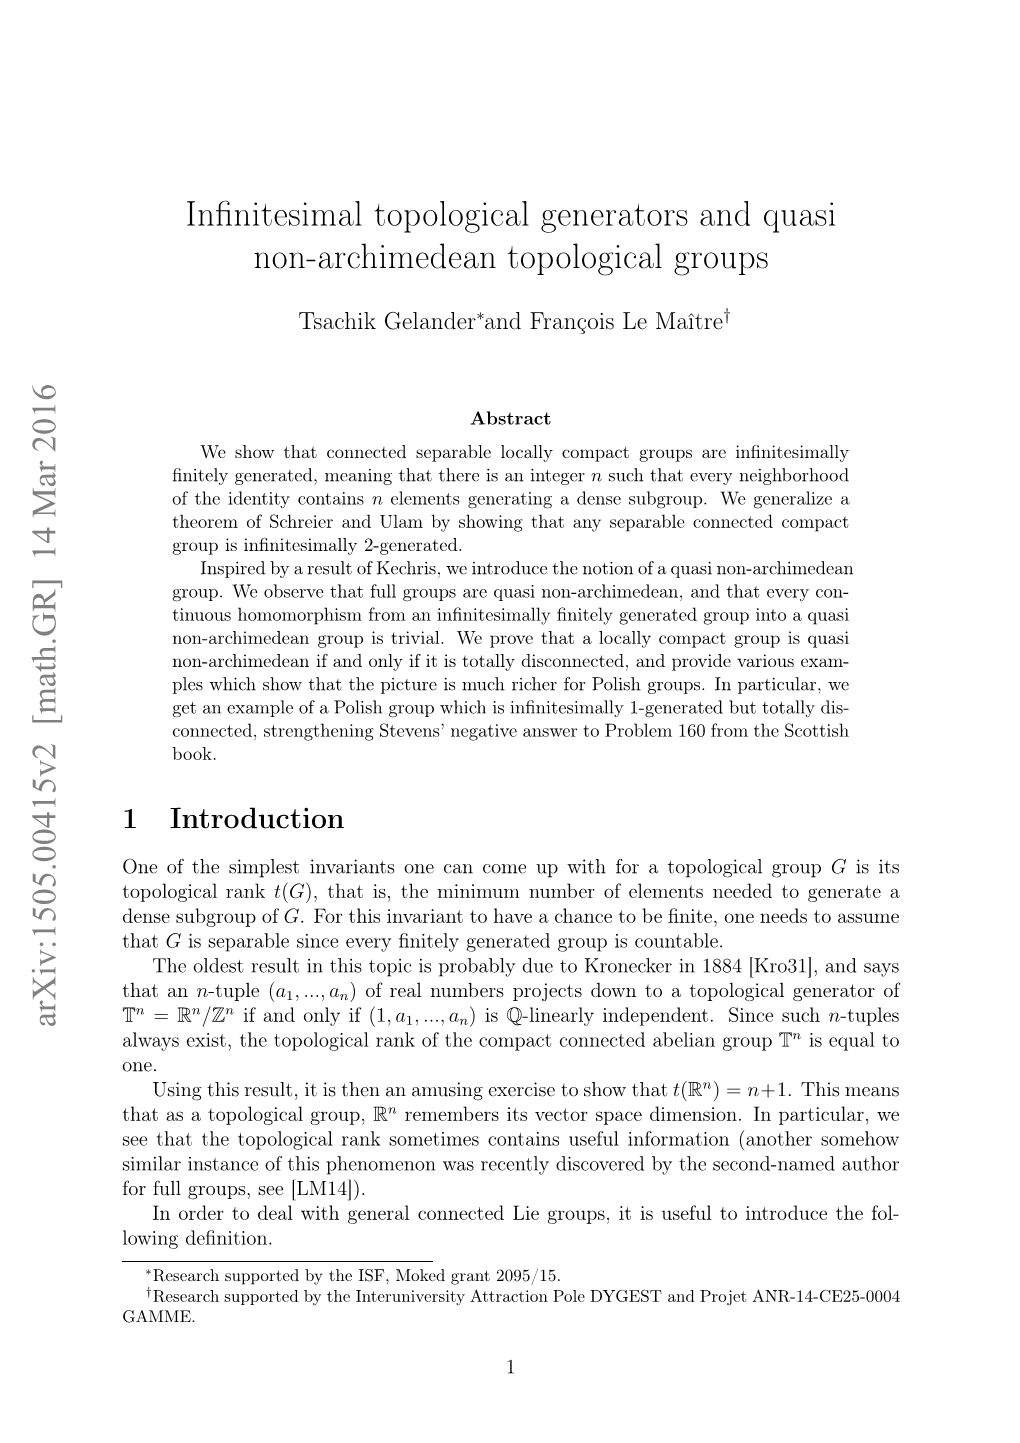 Infinitesimal Generators and Quasi Non-Archimedean Topological Groups